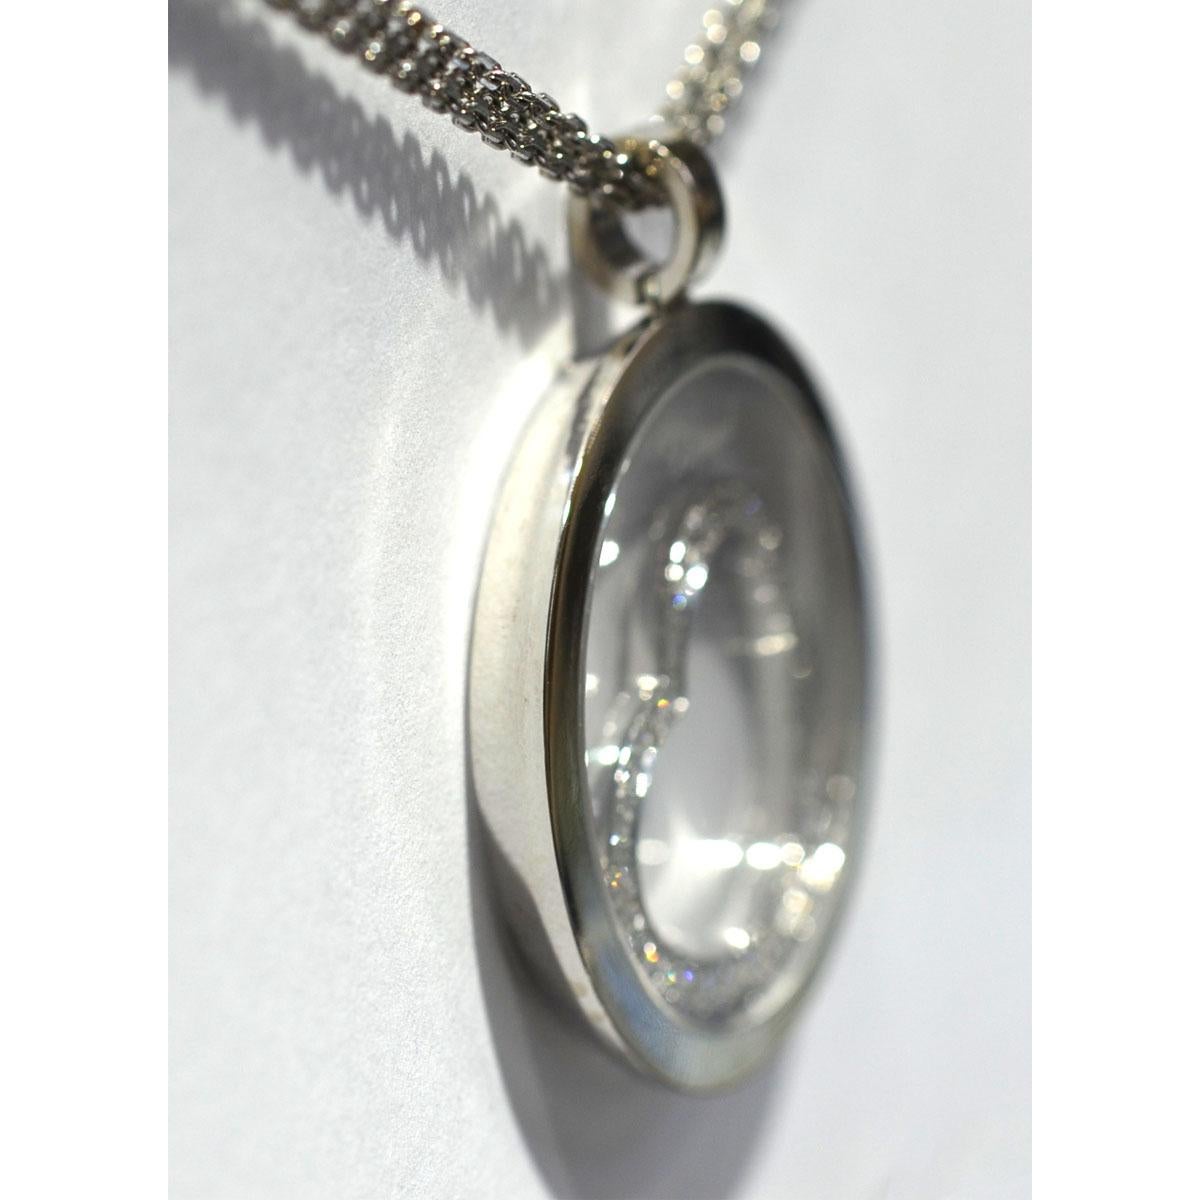 Company-Chopard 
Style-Floating Diamond Heart Pendant Necklace
Model-Happy Spirit 
Metal -18k White Gold Pendant W .93